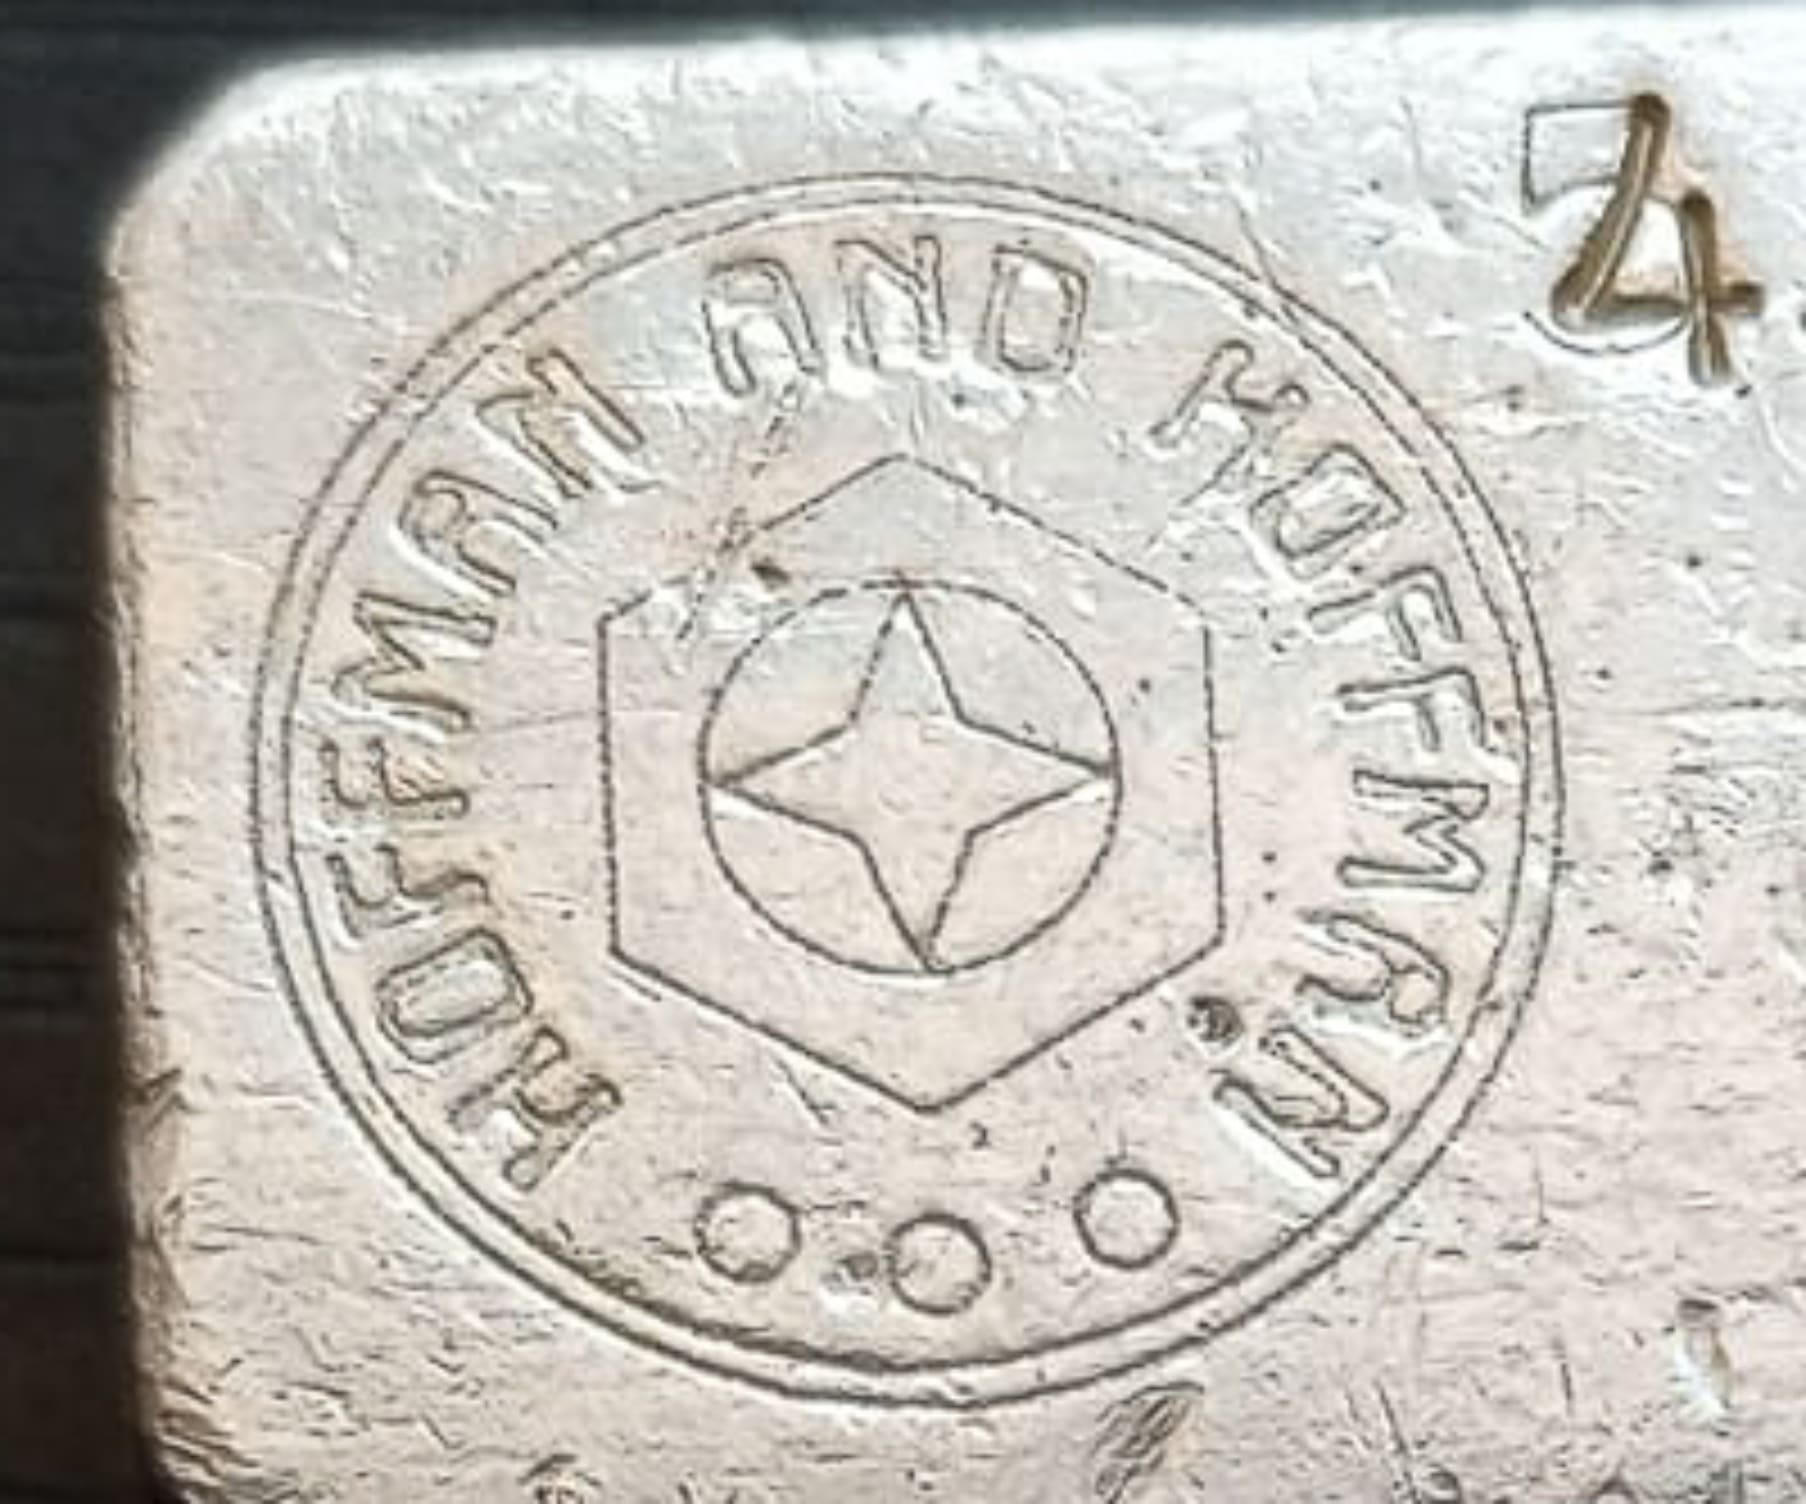 Hoffman and Hoffman vintage silver hallmark